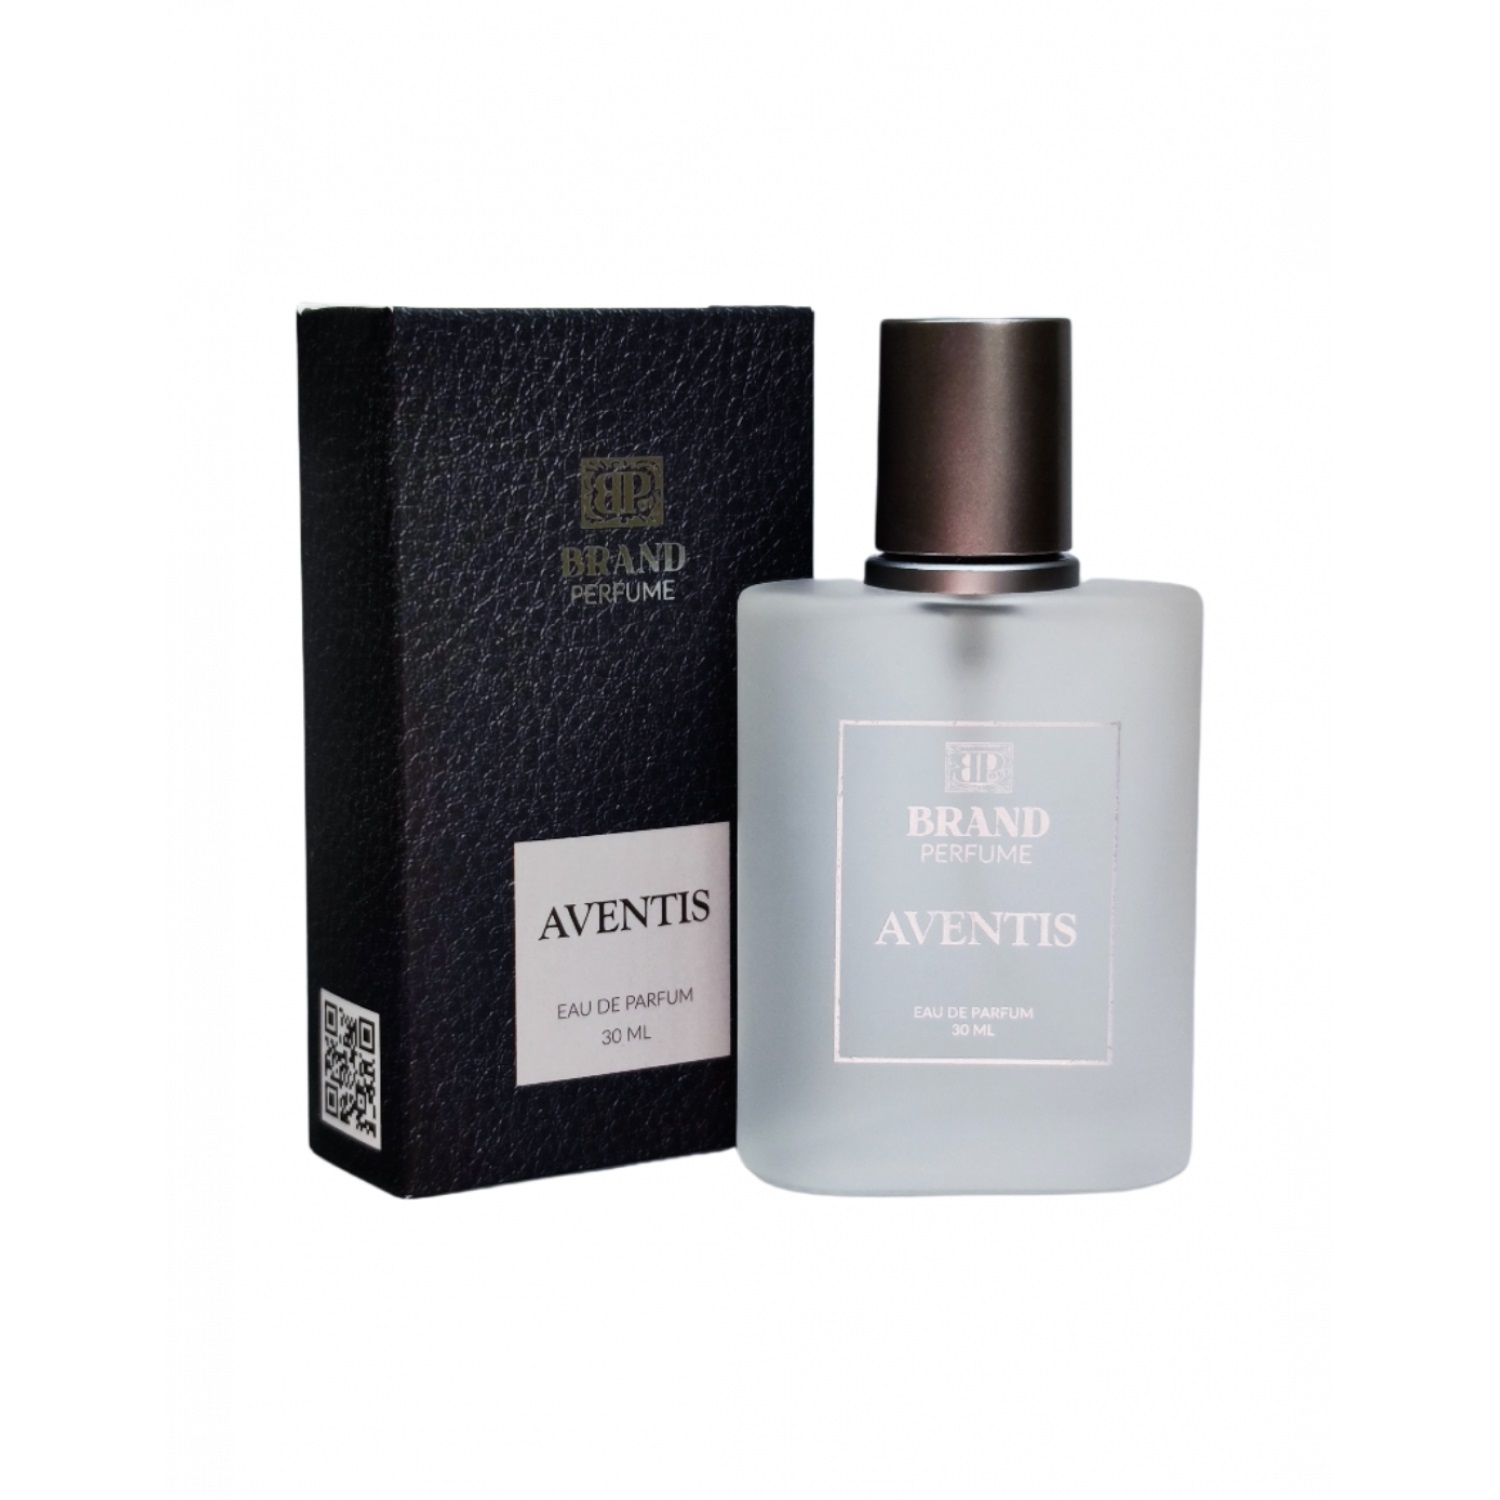 AVENTIS Eau De Parfum, Brand Perfume (Парфюмерная вода), спрей, 30 мл.